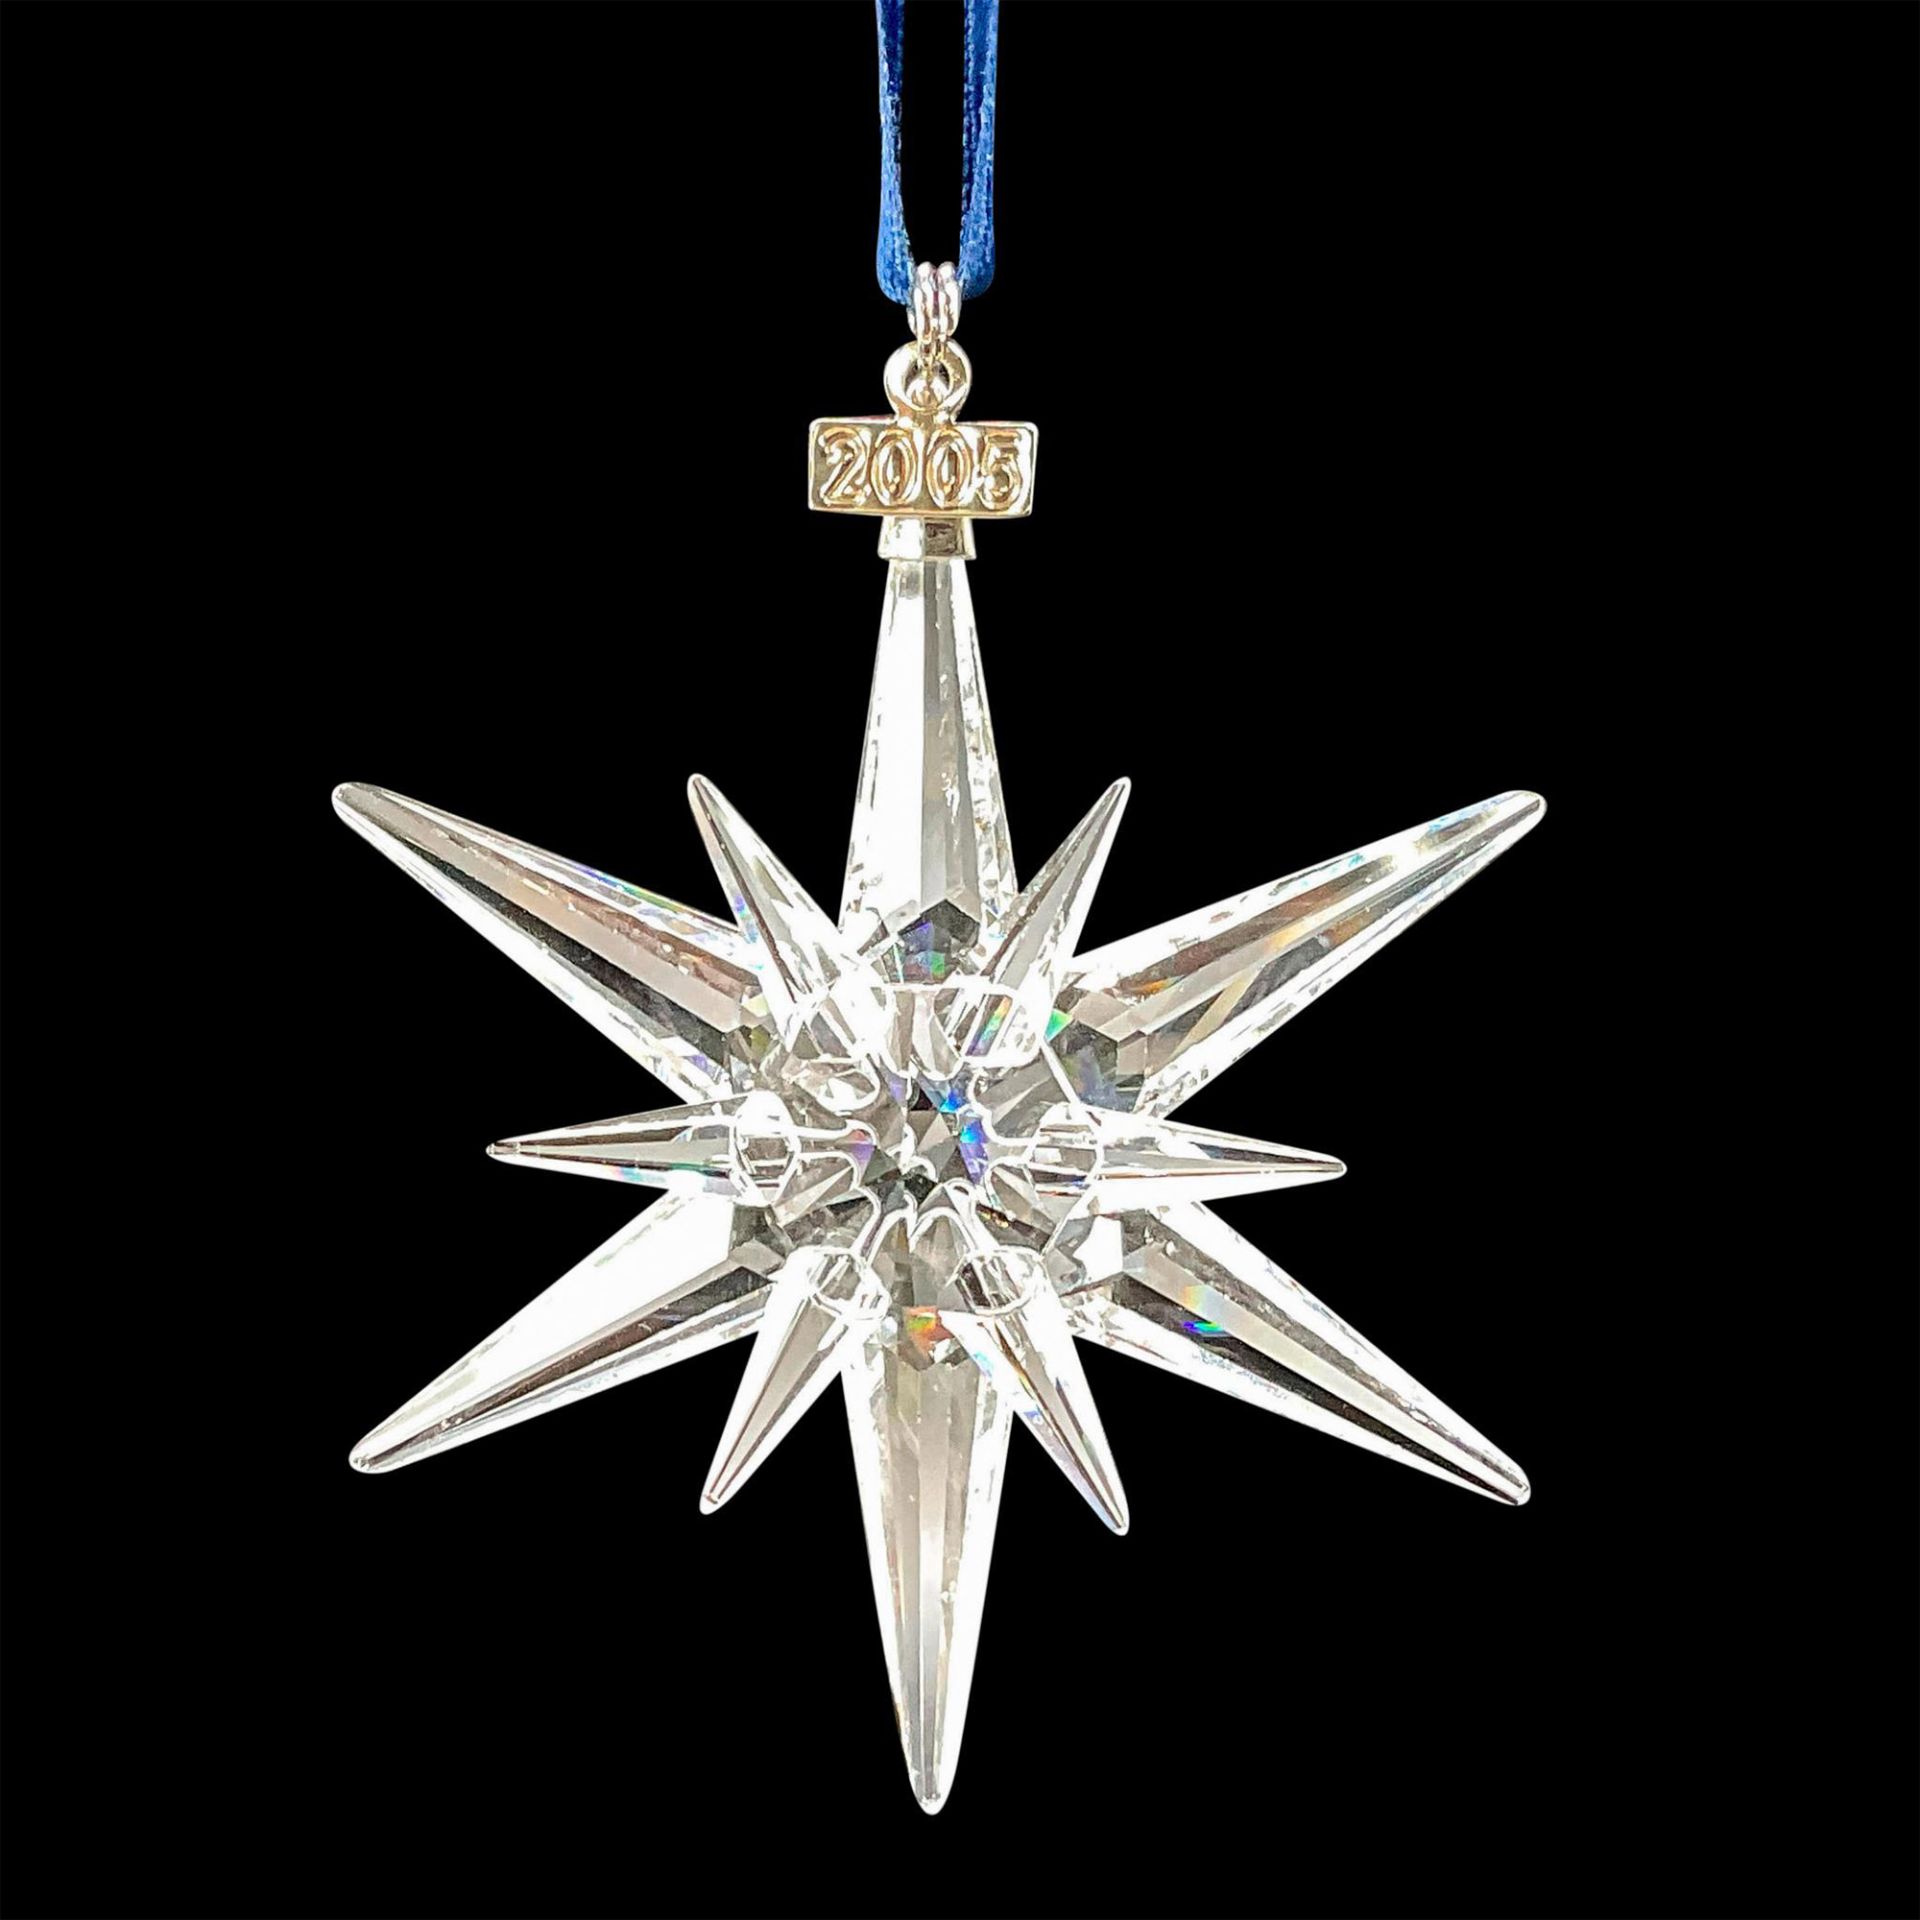 Swarovski Crystal Ornament, Rockefeller Star with Stand - Image 2 of 3